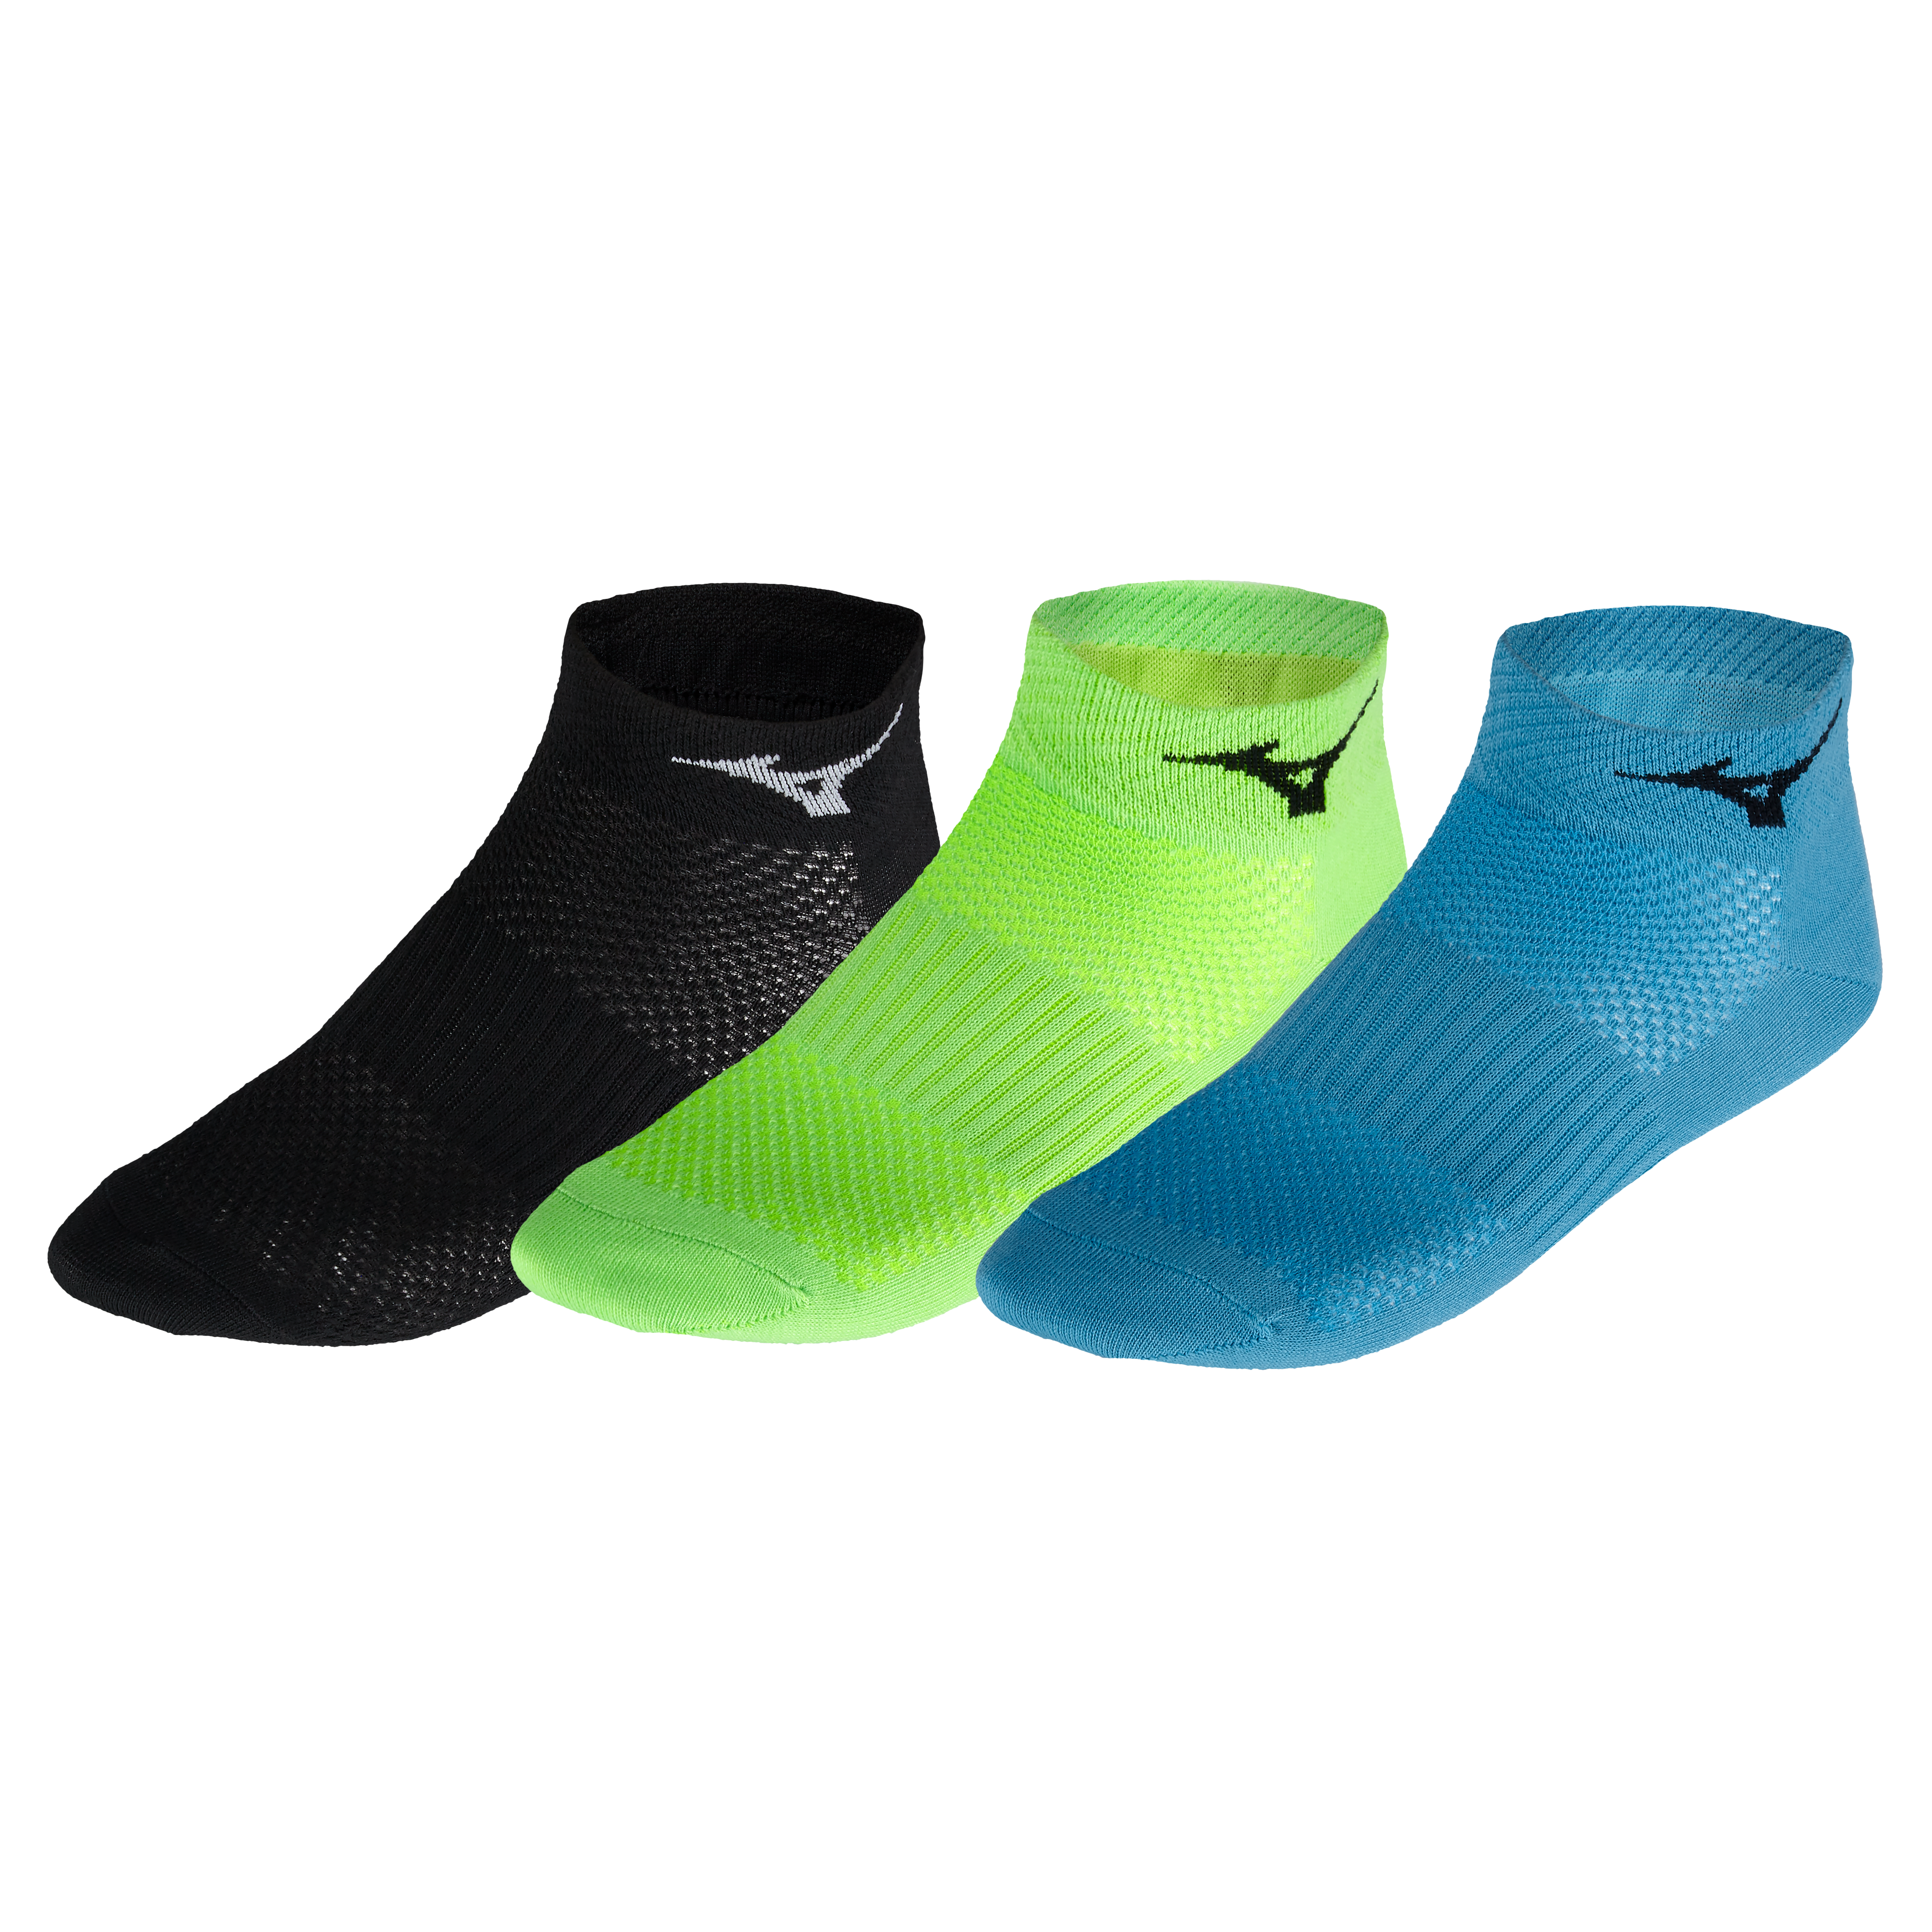 Mizuno Training Mid 3P, socks, 3 pairs, black/light green/maui blue, black, green, blue